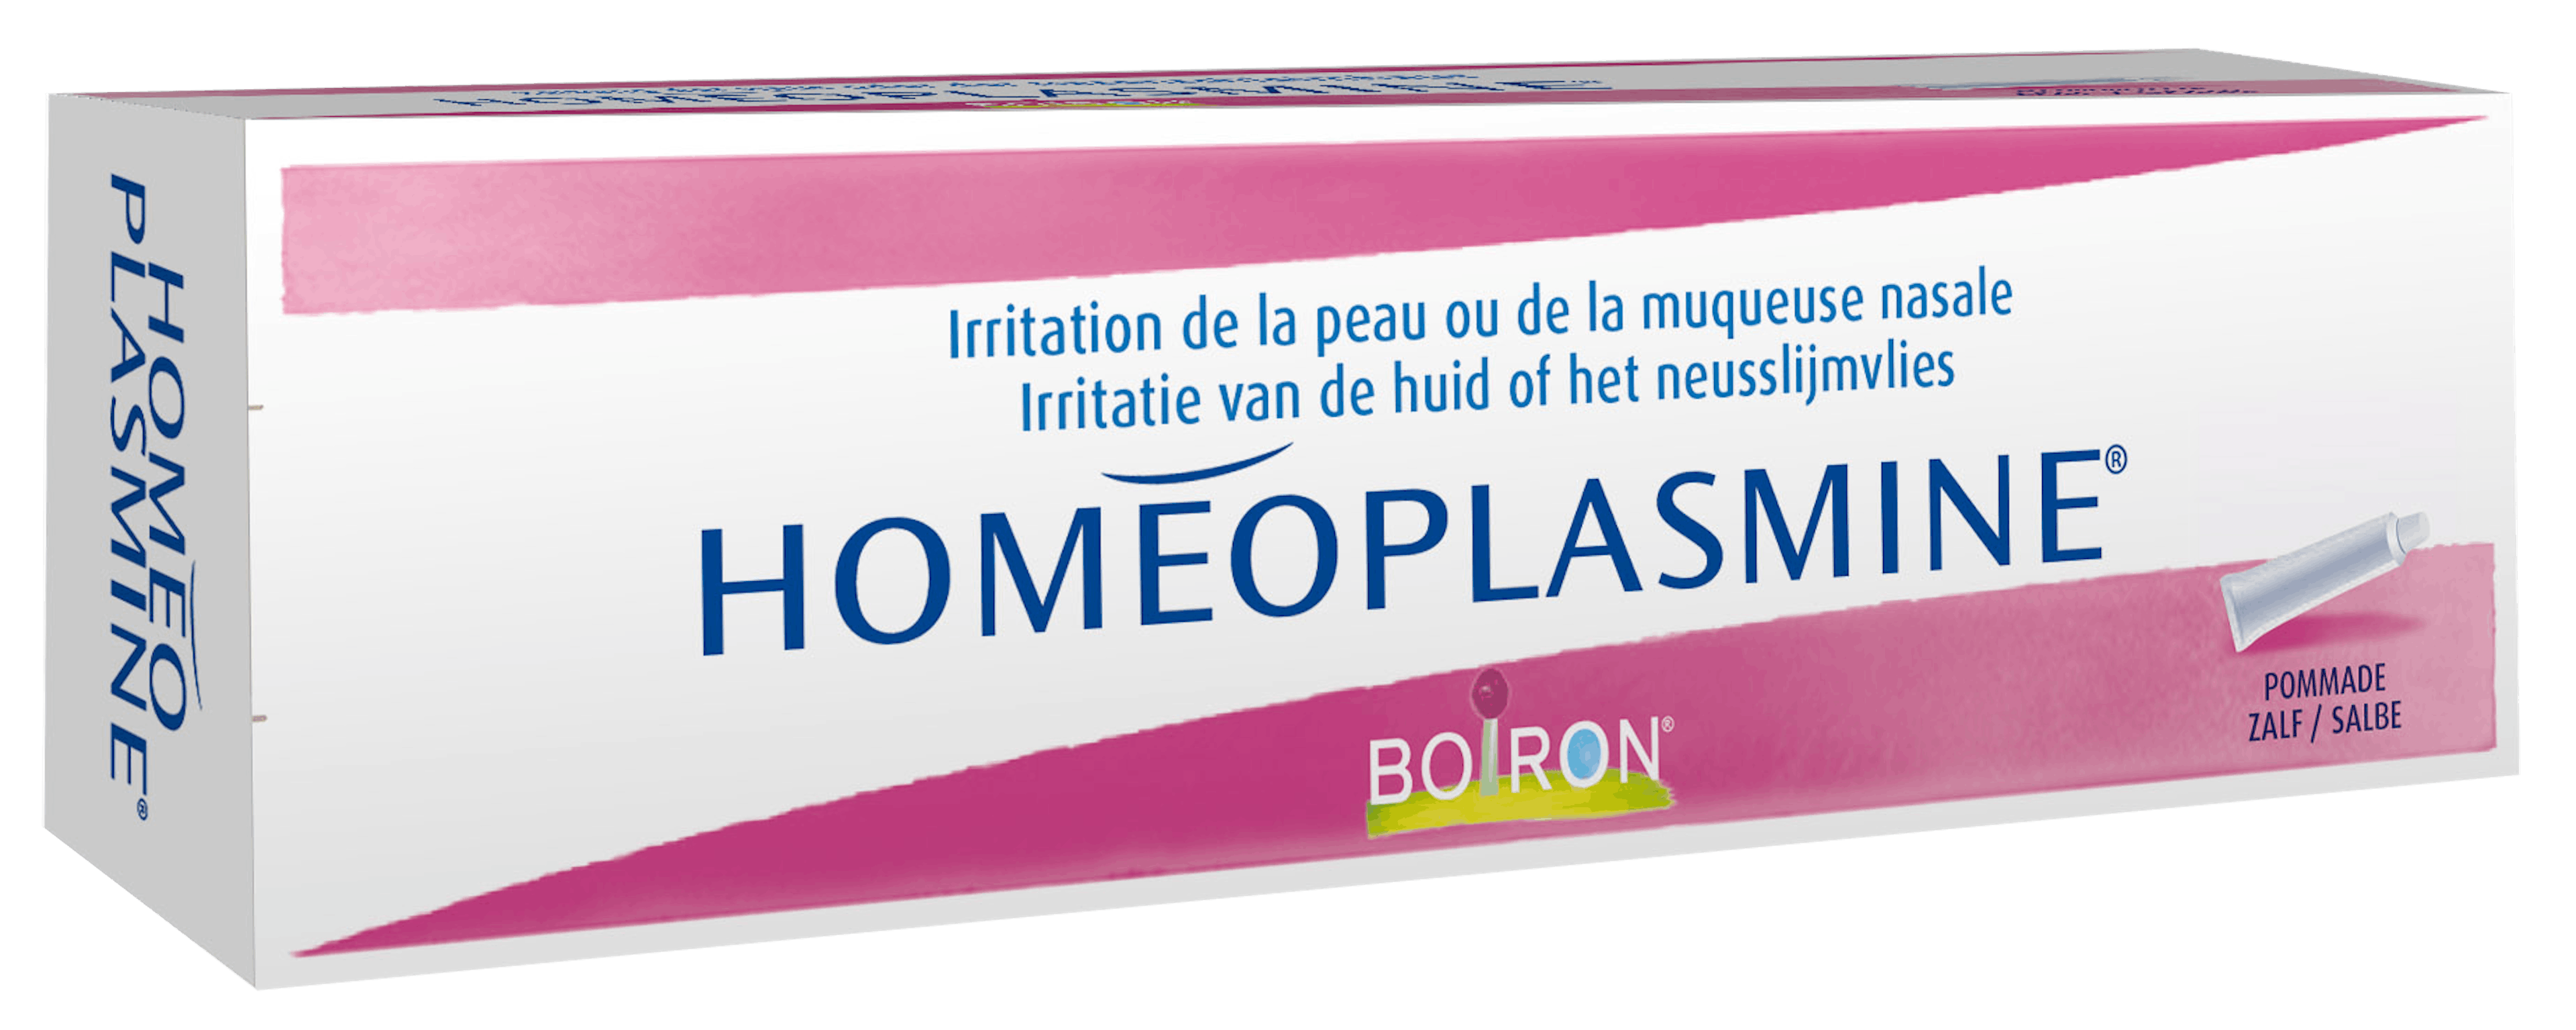 Verval roltrap fysiek Homeoplasmine | Zalf | Huidirritaties | Boiron: Nr1 in Homeopathie